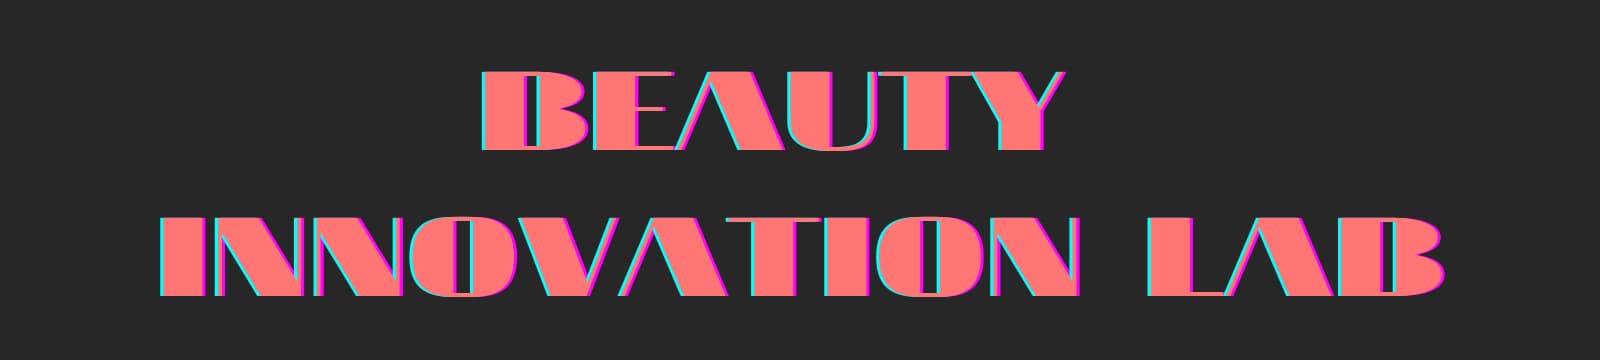 BeautyInnovationLab